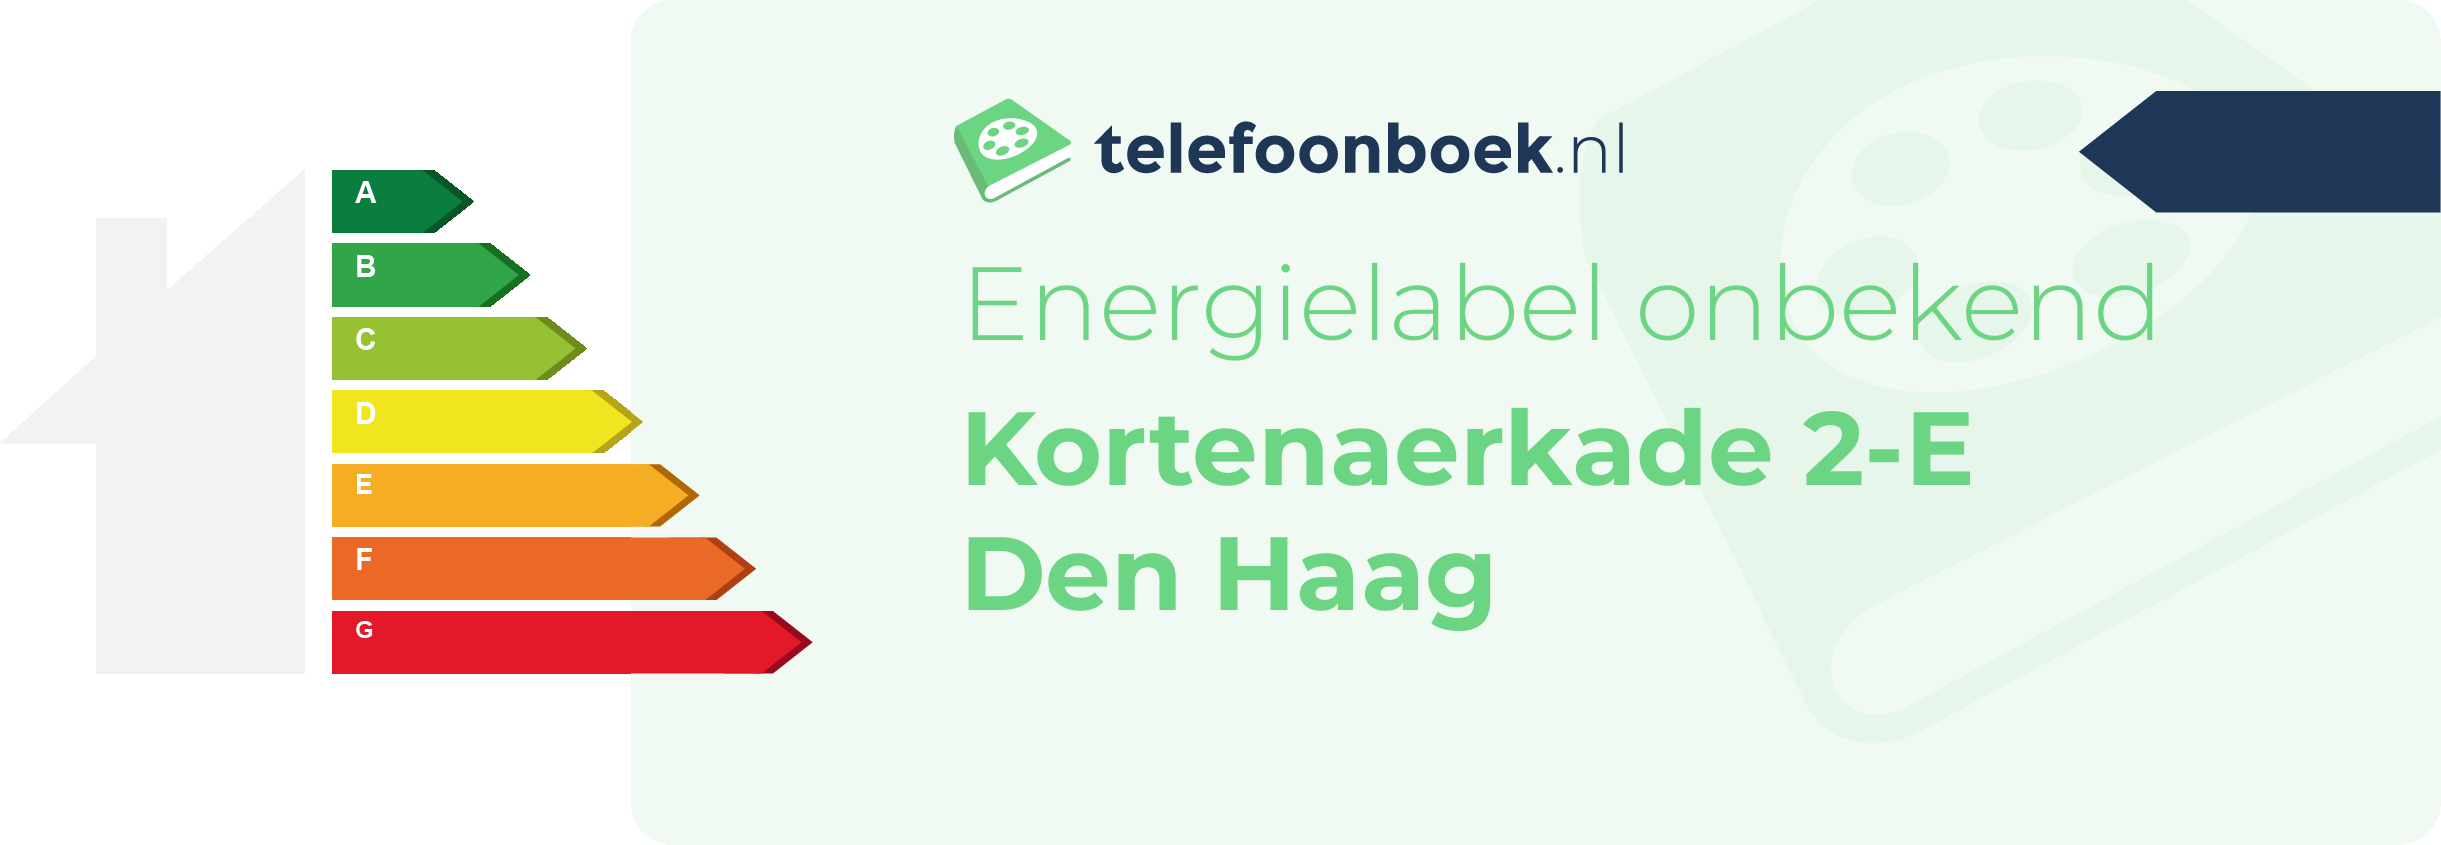 Energielabel Kortenaerkade 2-E Den Haag